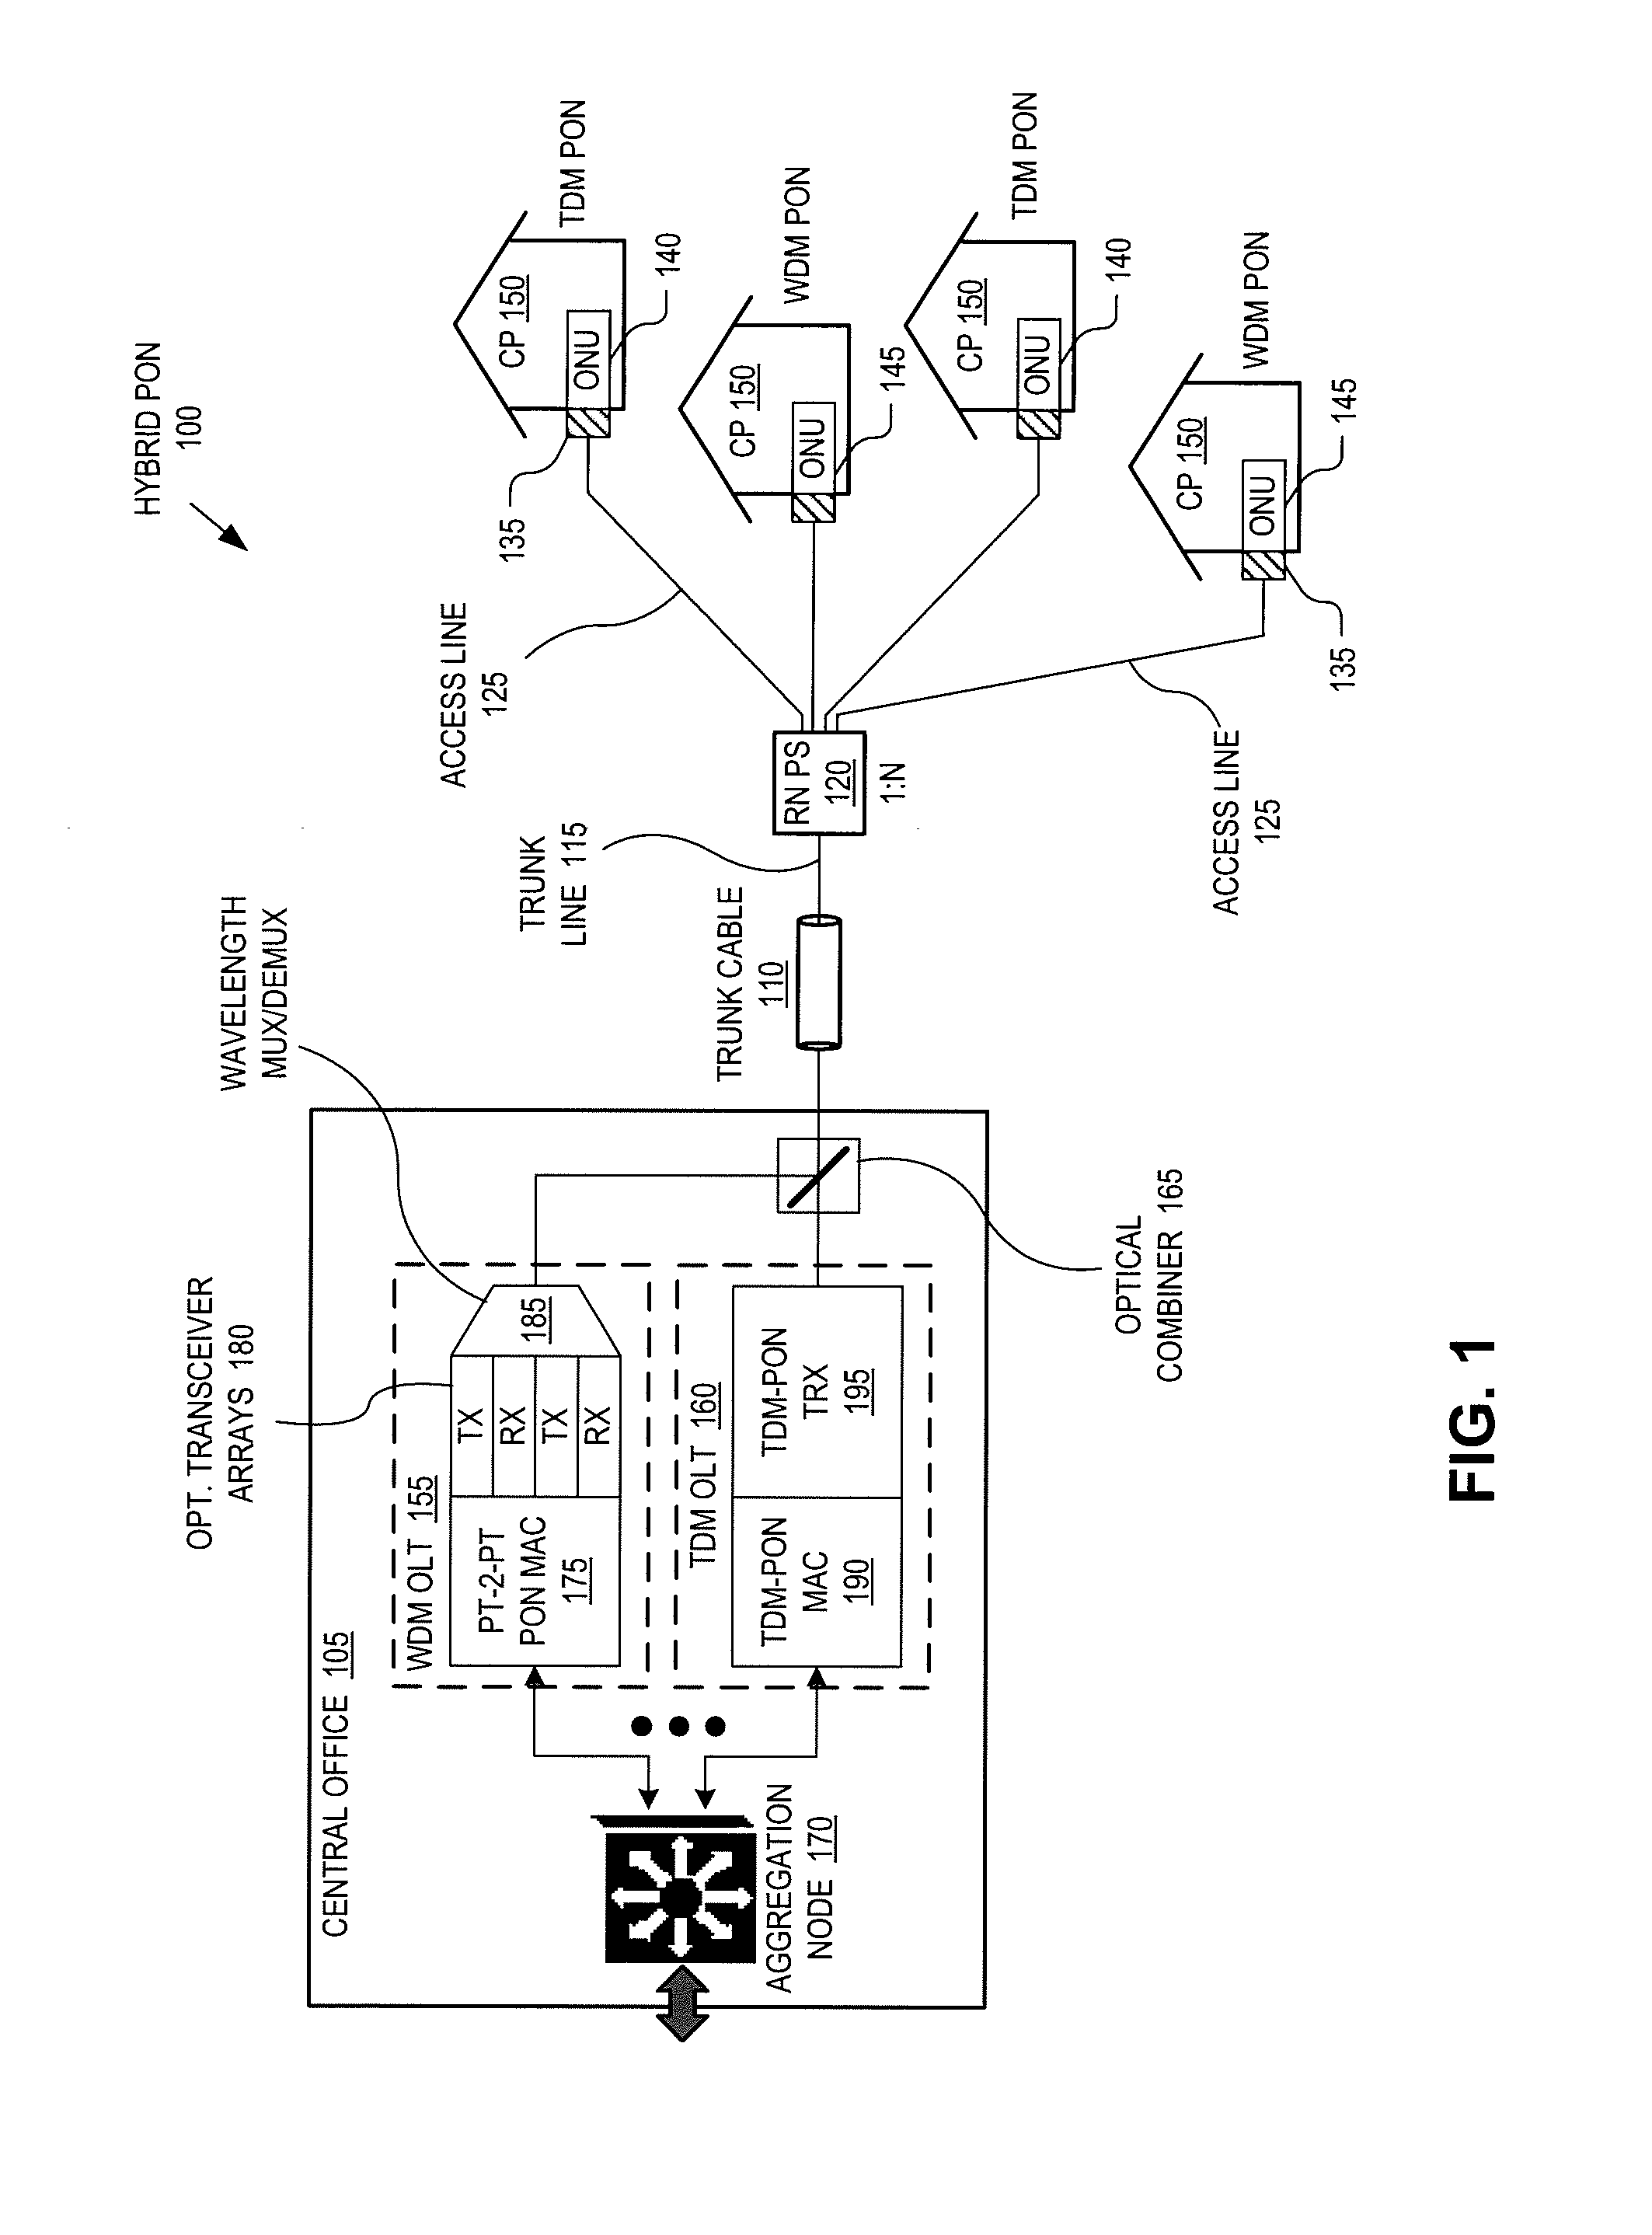 Passive optical network with asymmetric modulation scheme